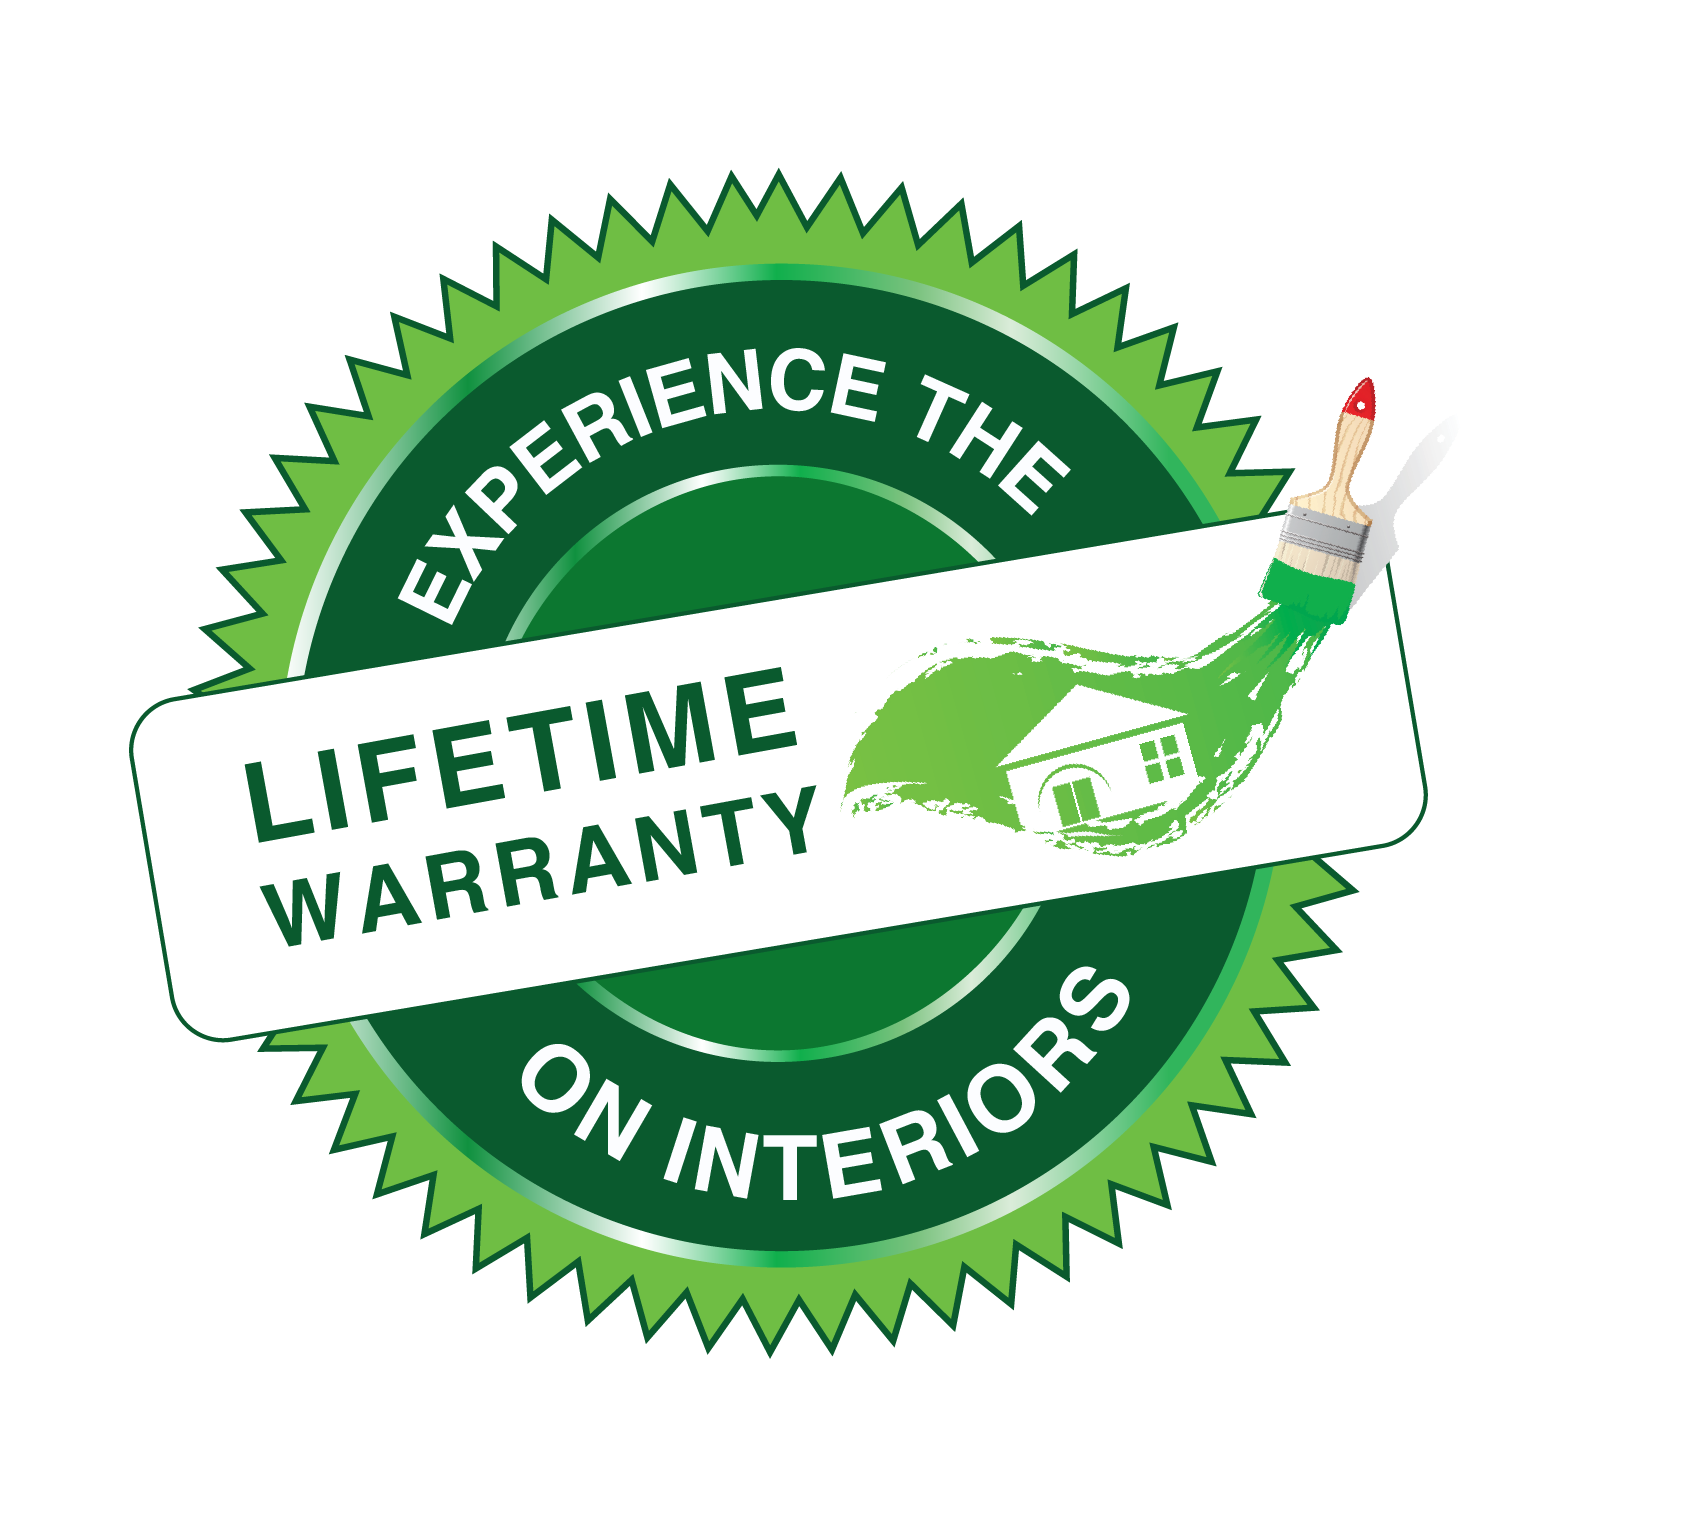 Lifetime warranty on interiors logo